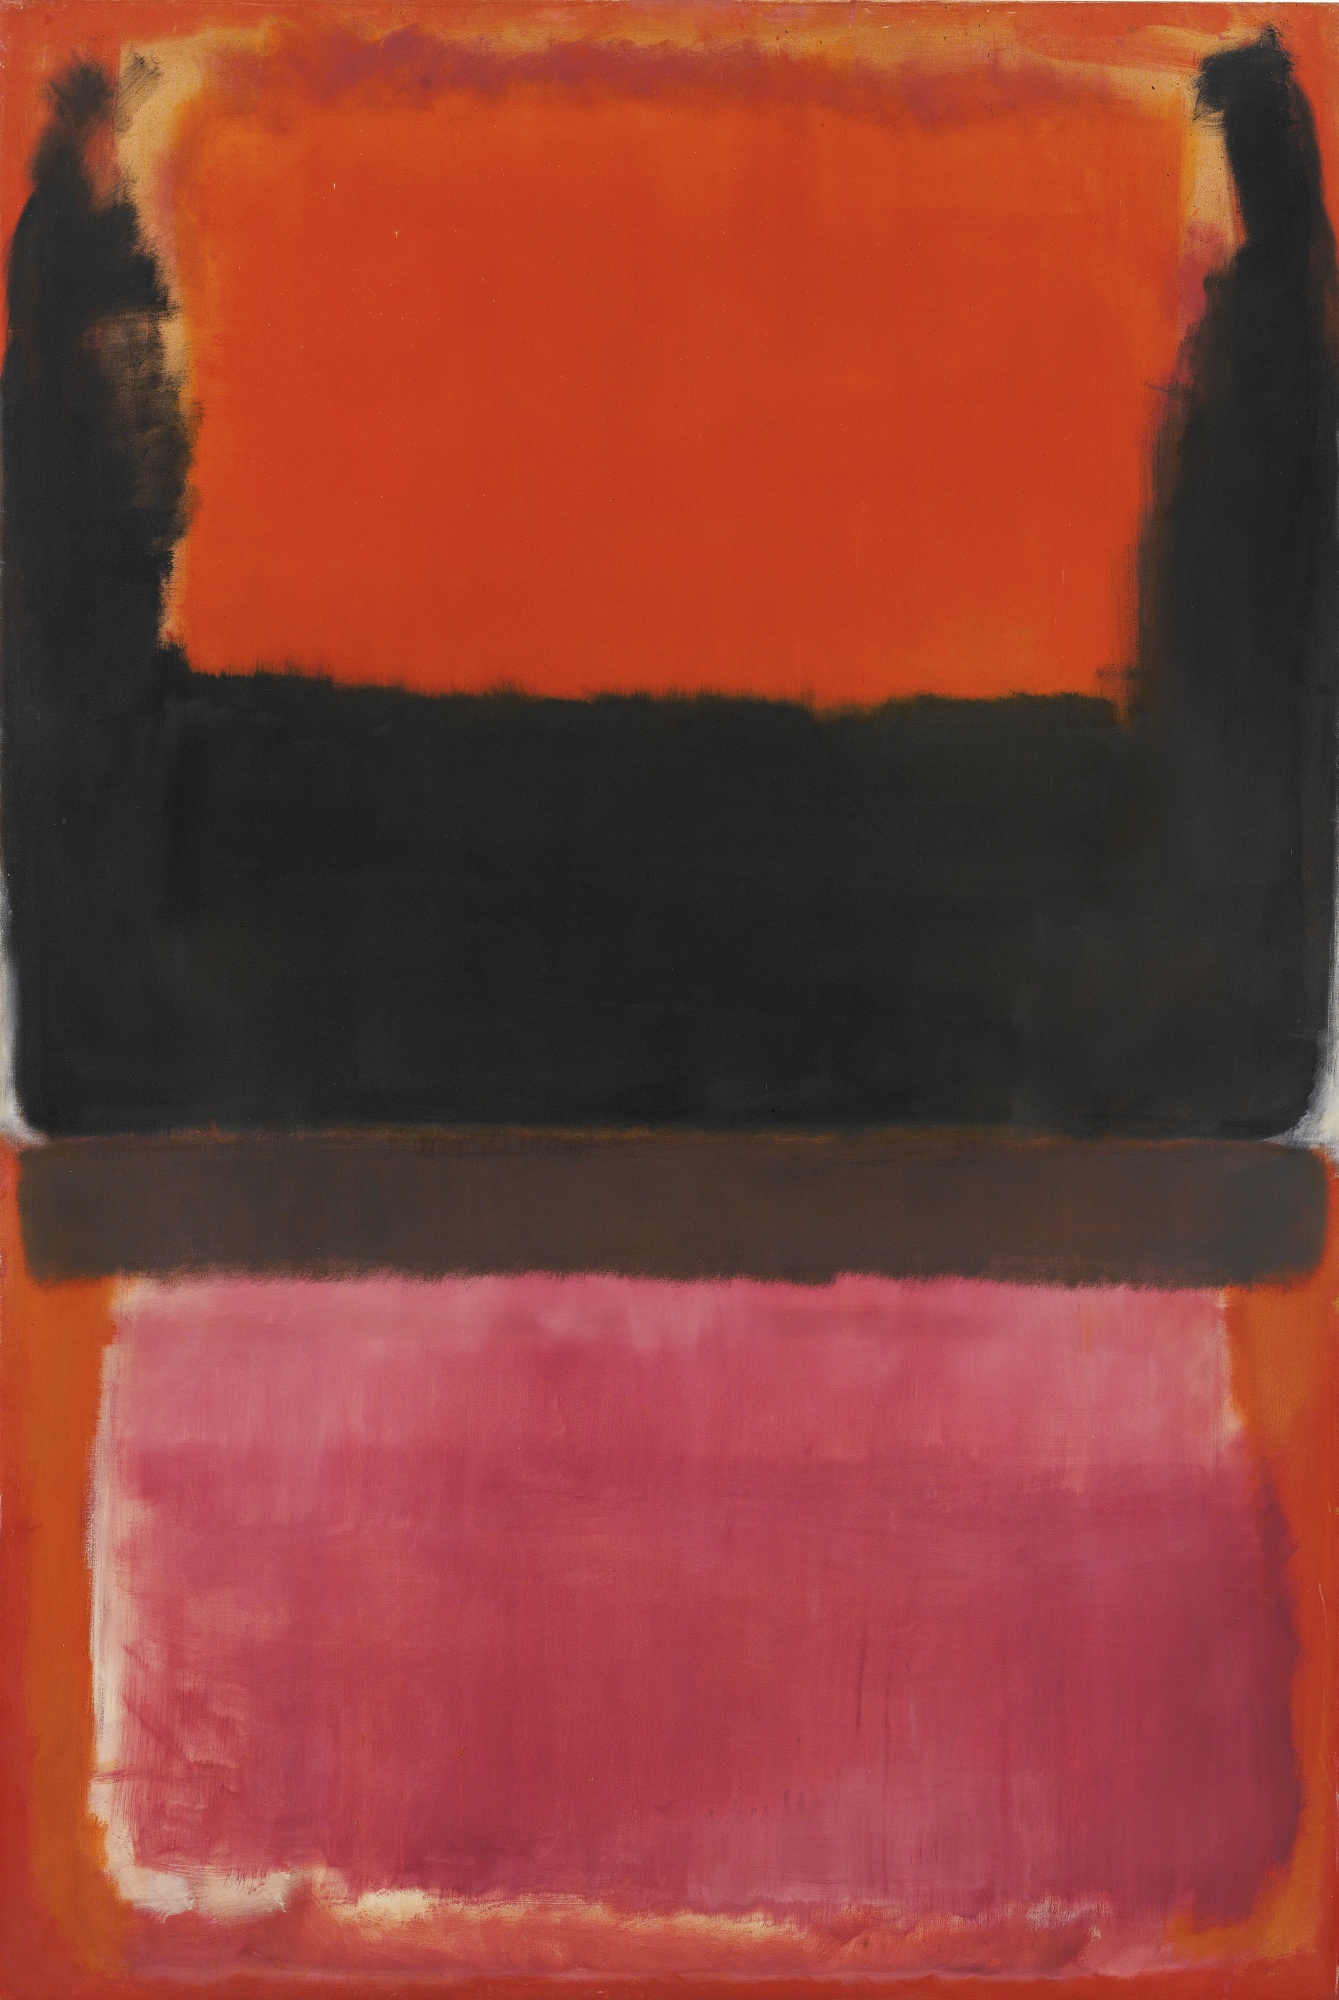 Mark-Rothko-No-21-Red-Brown-Black-and-Orange-1951-via-Sothebys